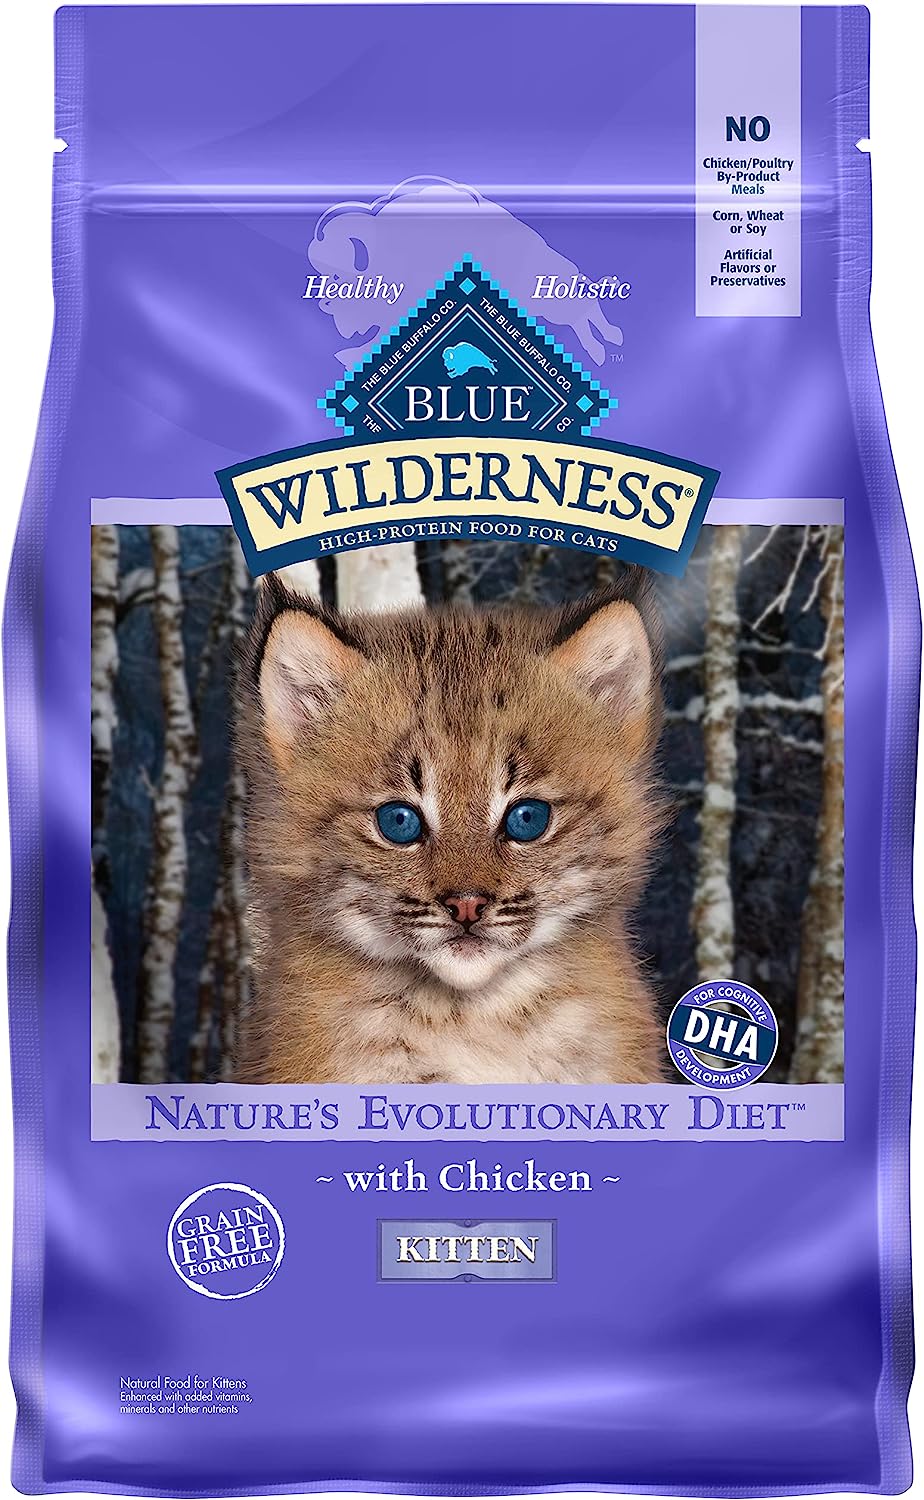 Blue Buffalo Cat Food for Kittens